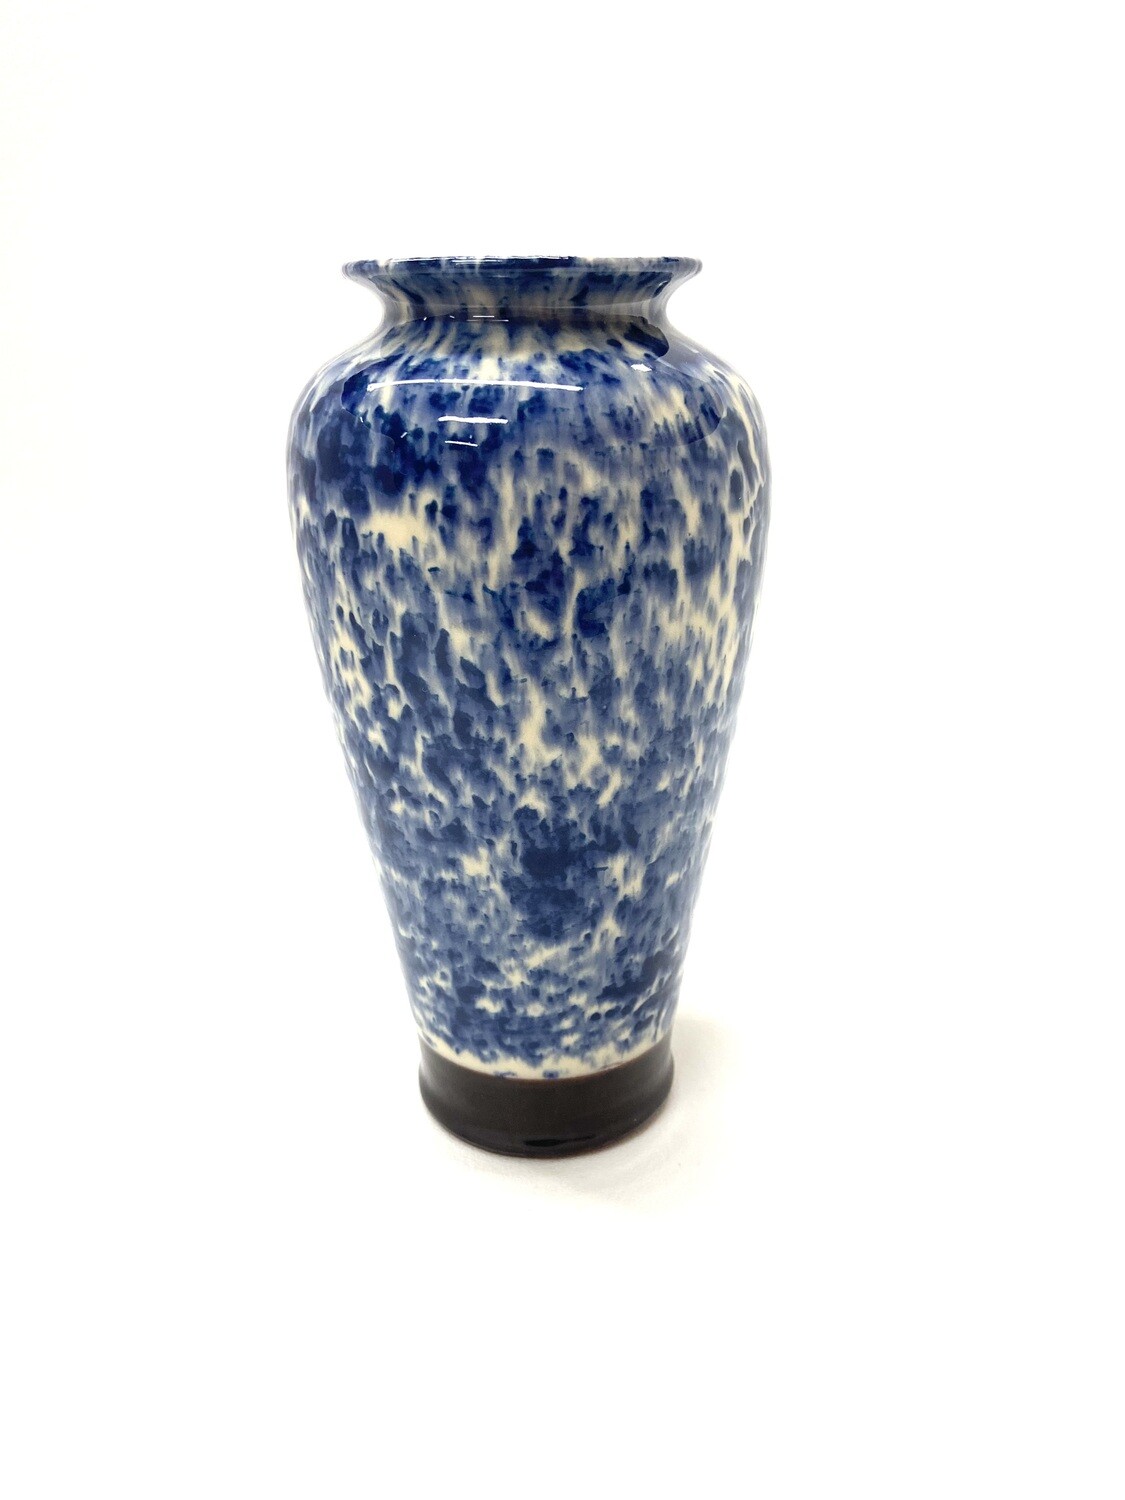 Sml Blue Sponge Narrow Vase - Birdsall-Worthington Pottery 